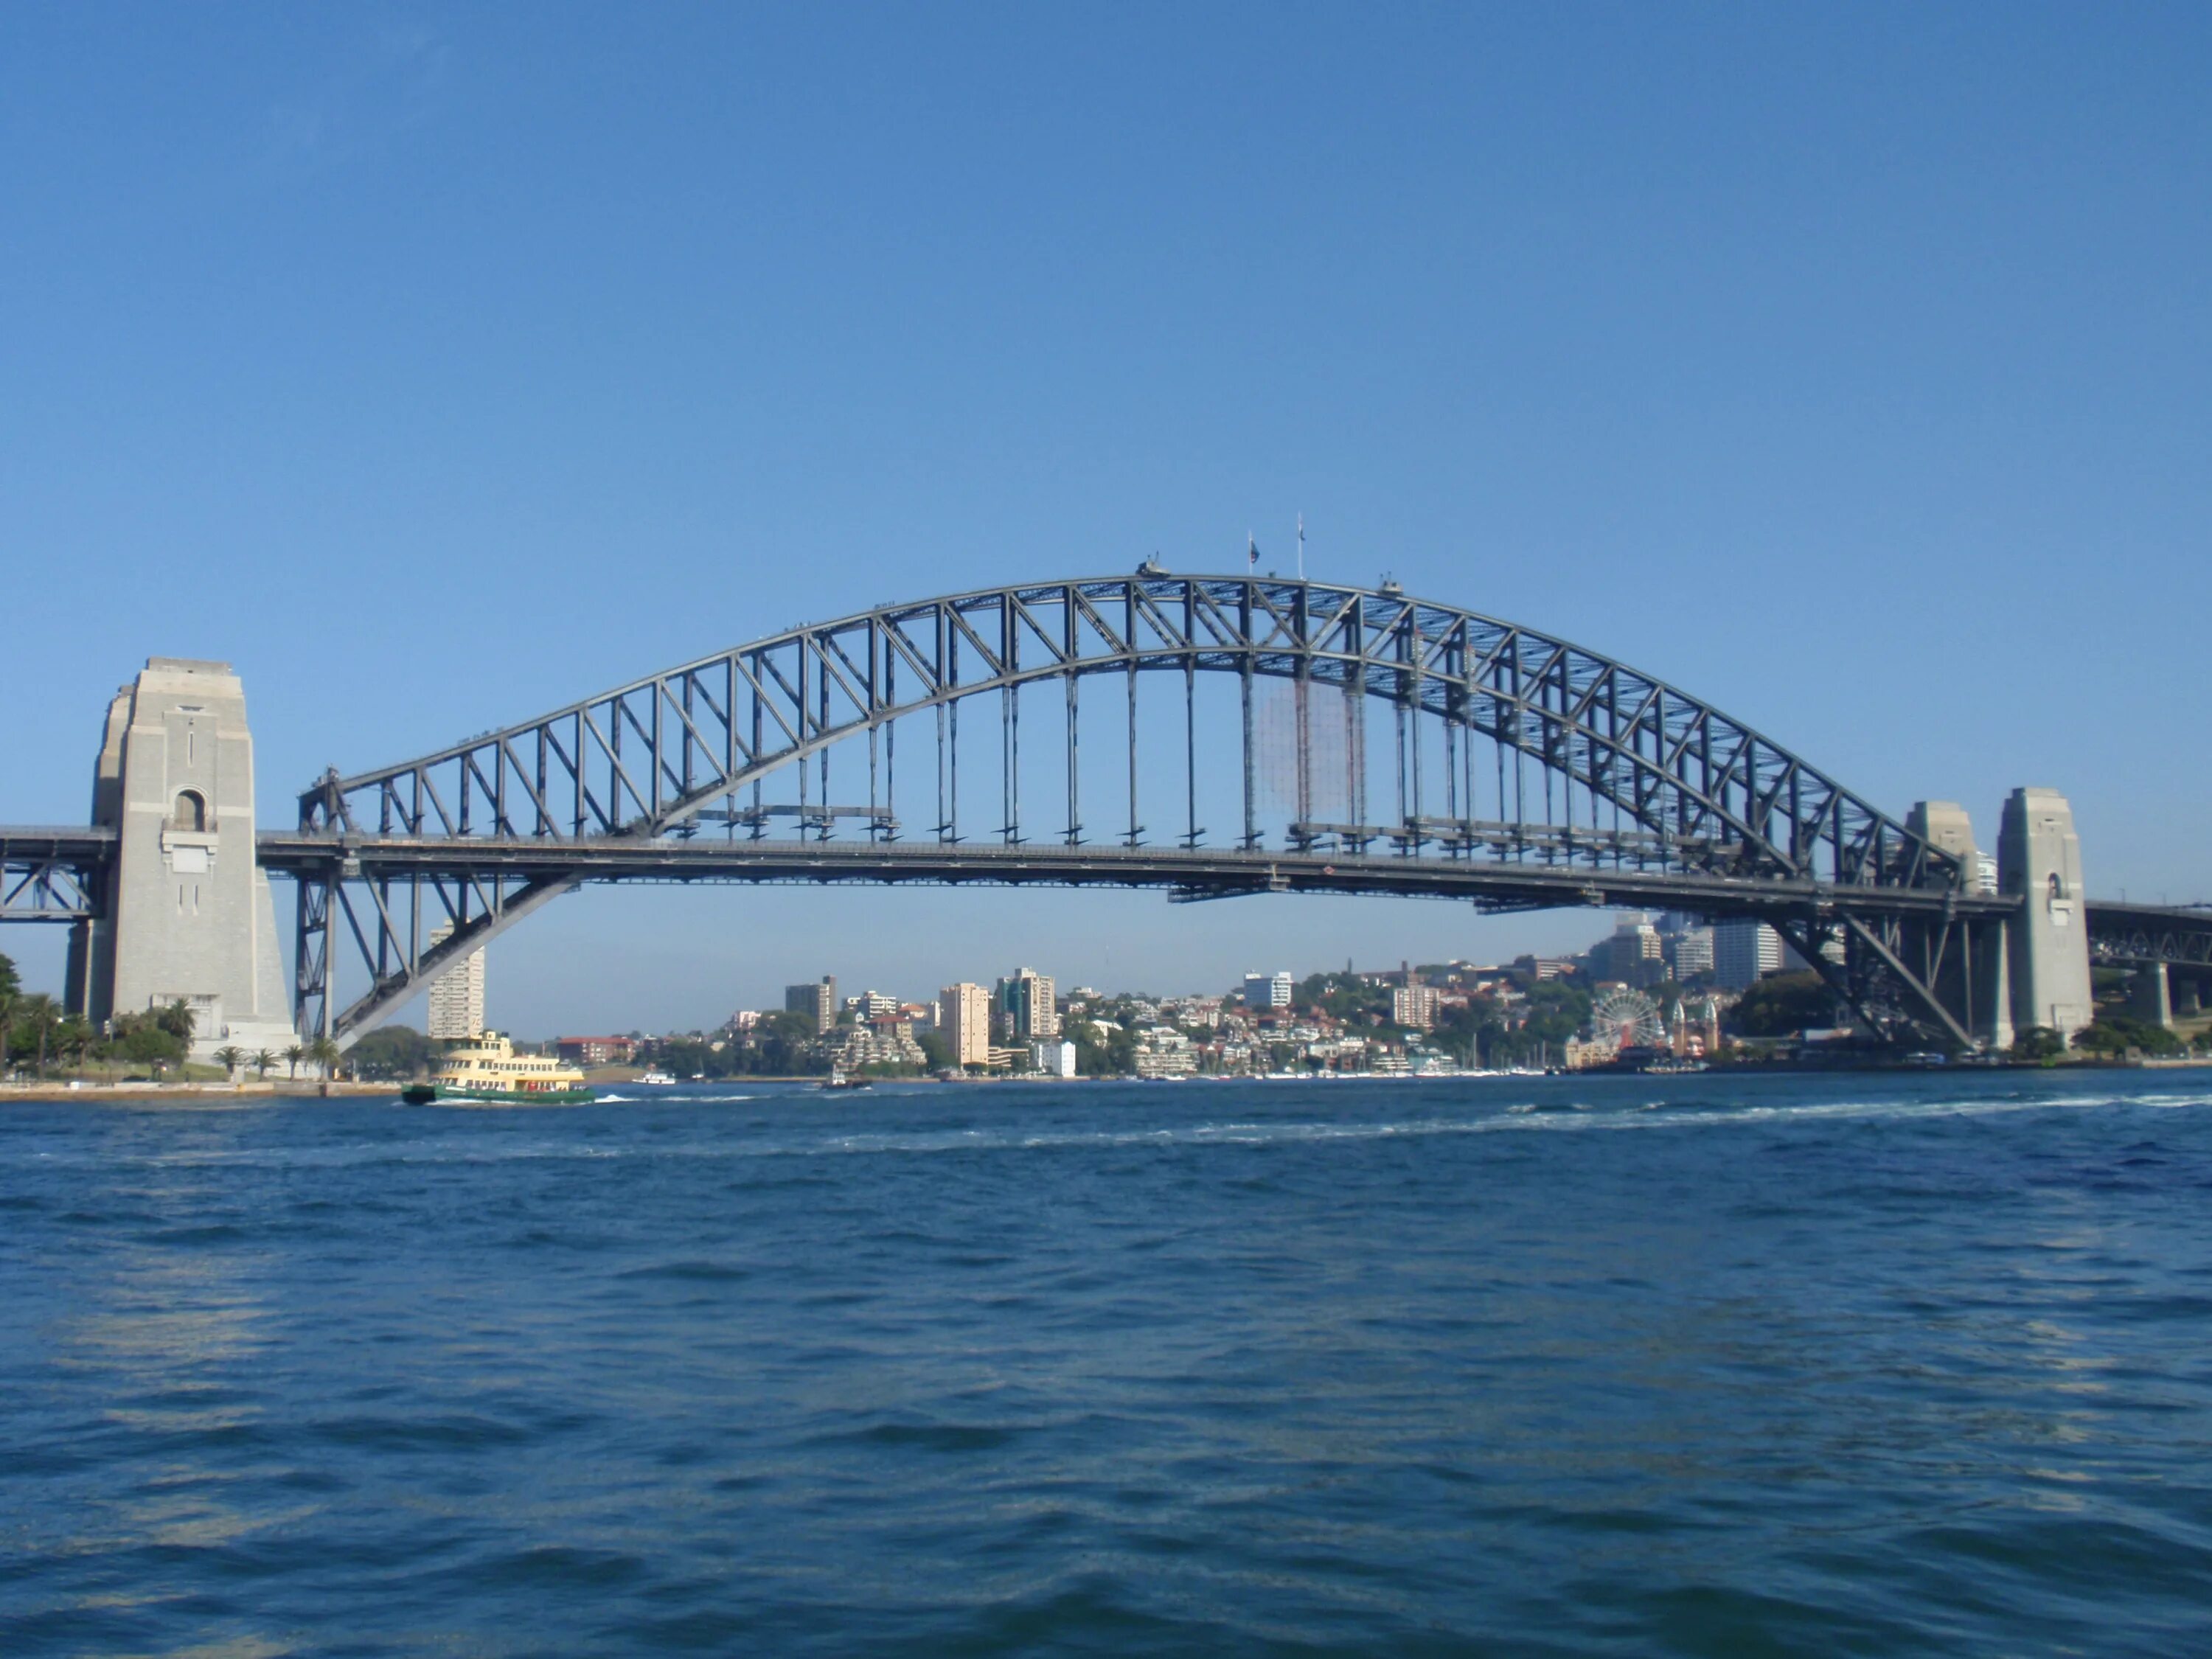 Харбор-бридж Сидней. Австралия.Сидней.мост Харбор-бридж. Сиднейский мост Харбор-бридж. Harbour Bridge Австралия.